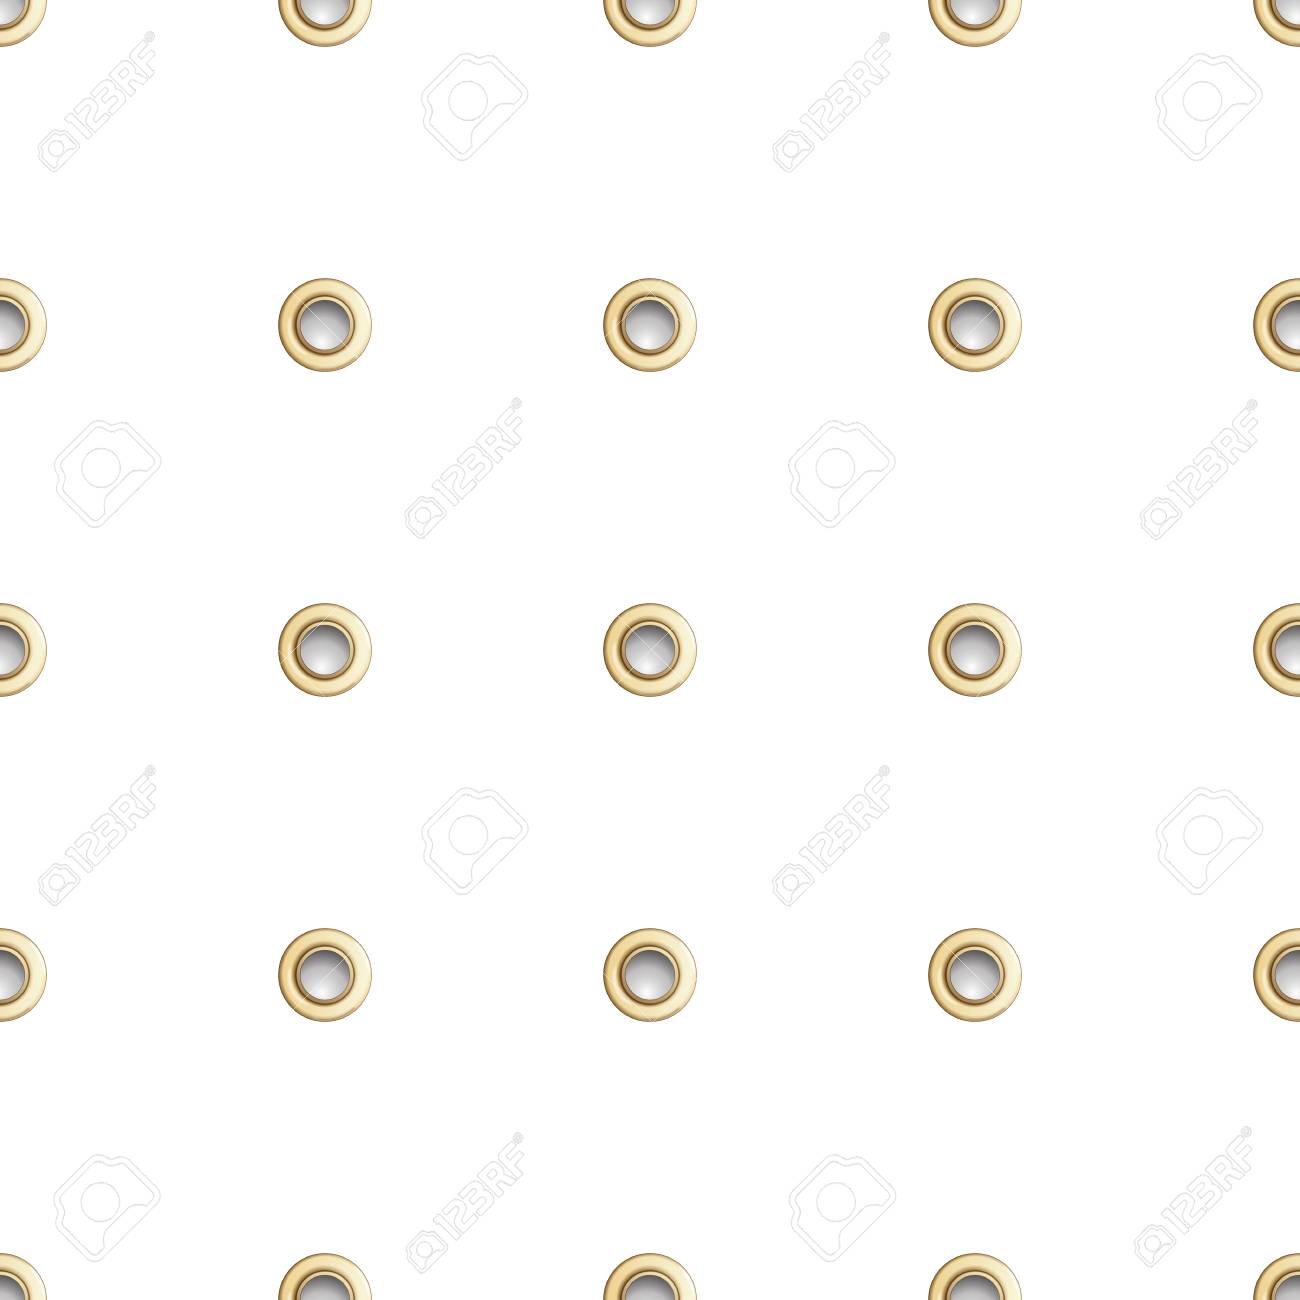 Golden Eyelet Seamless Pattern Isolated On White Background